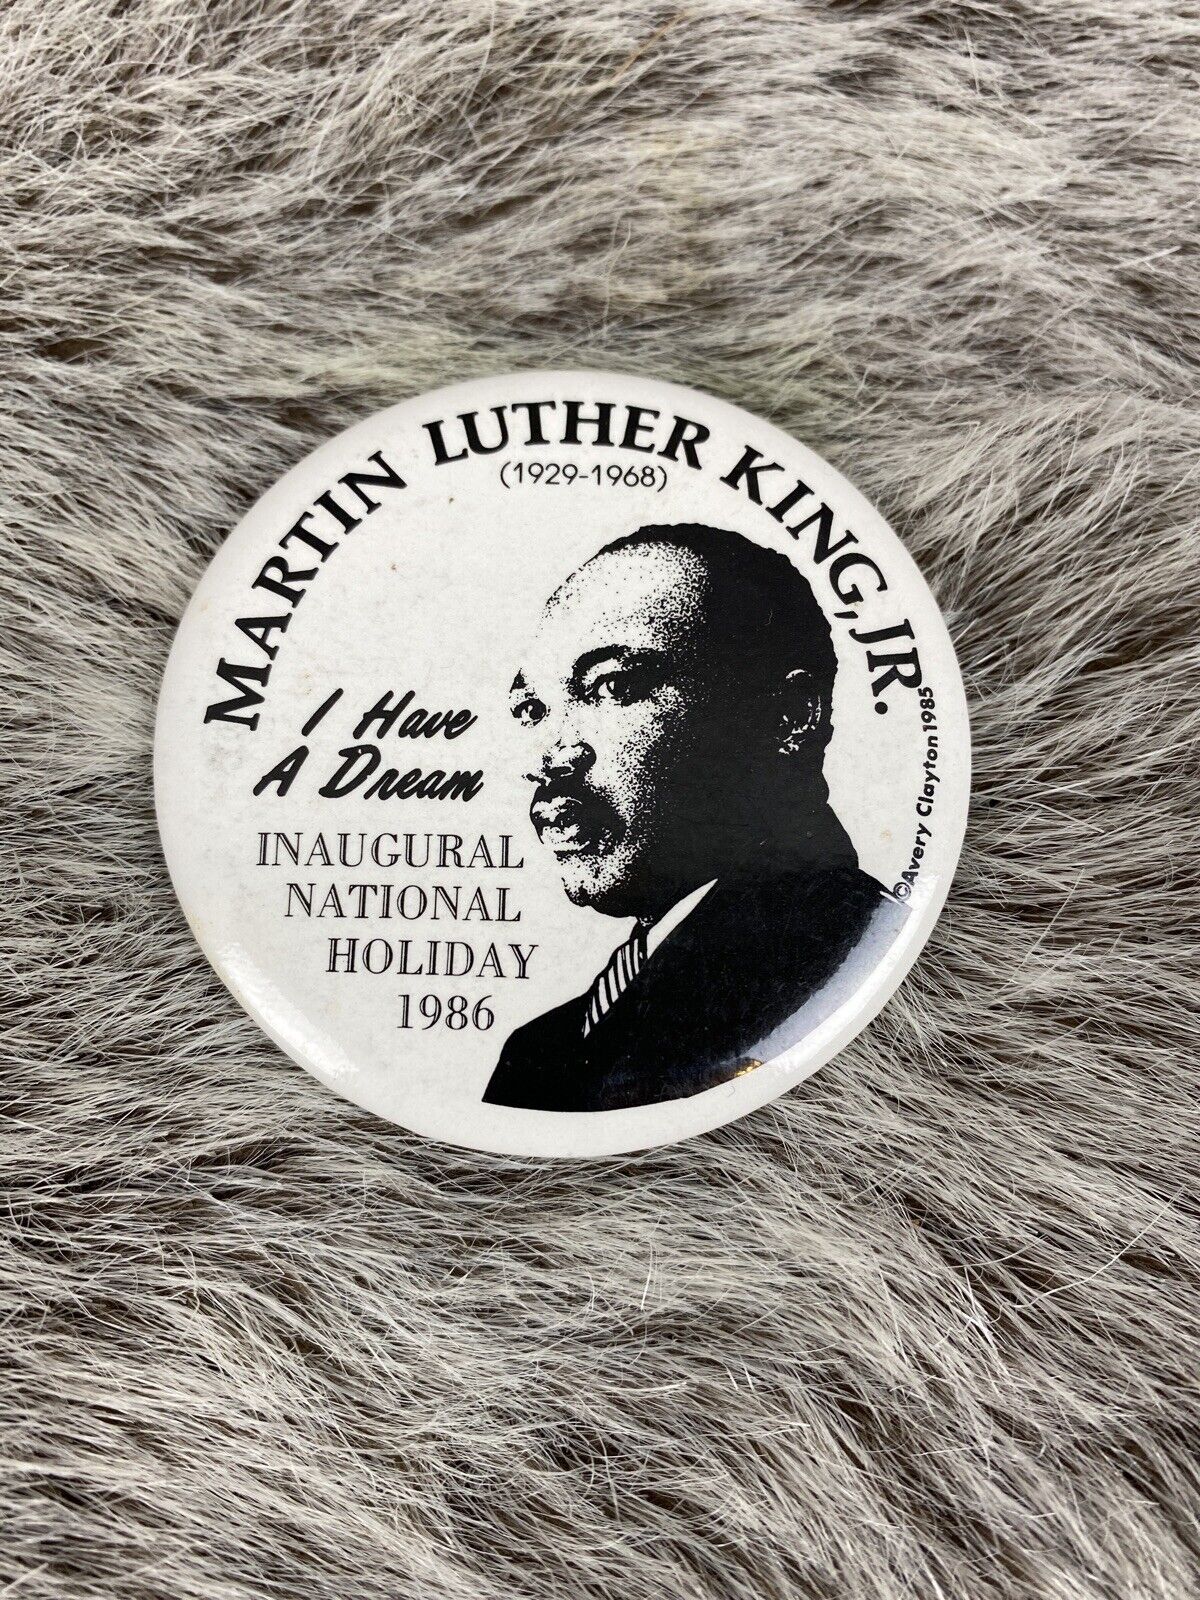 Martin Luther King Inaugural National Holiday 1986 Pin Vintage